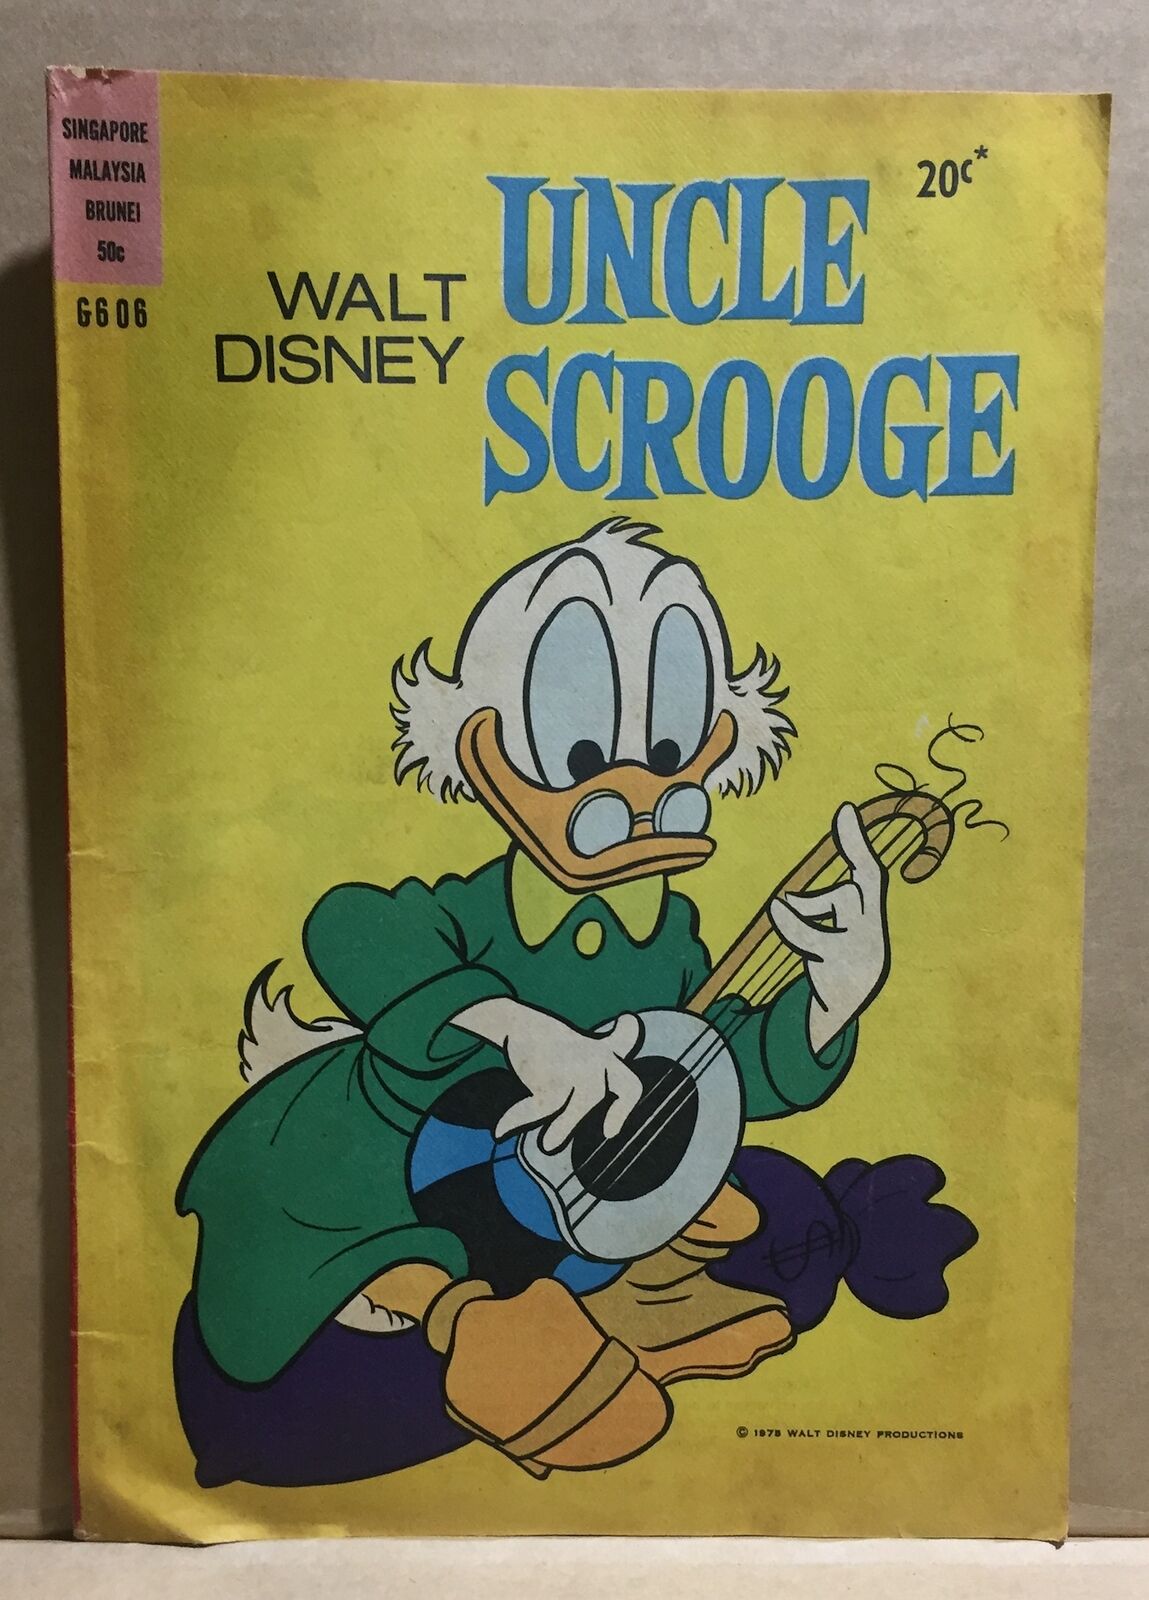 WALT DISNEY COMIC BOOK - UNCLE SCROOGE G606 australian